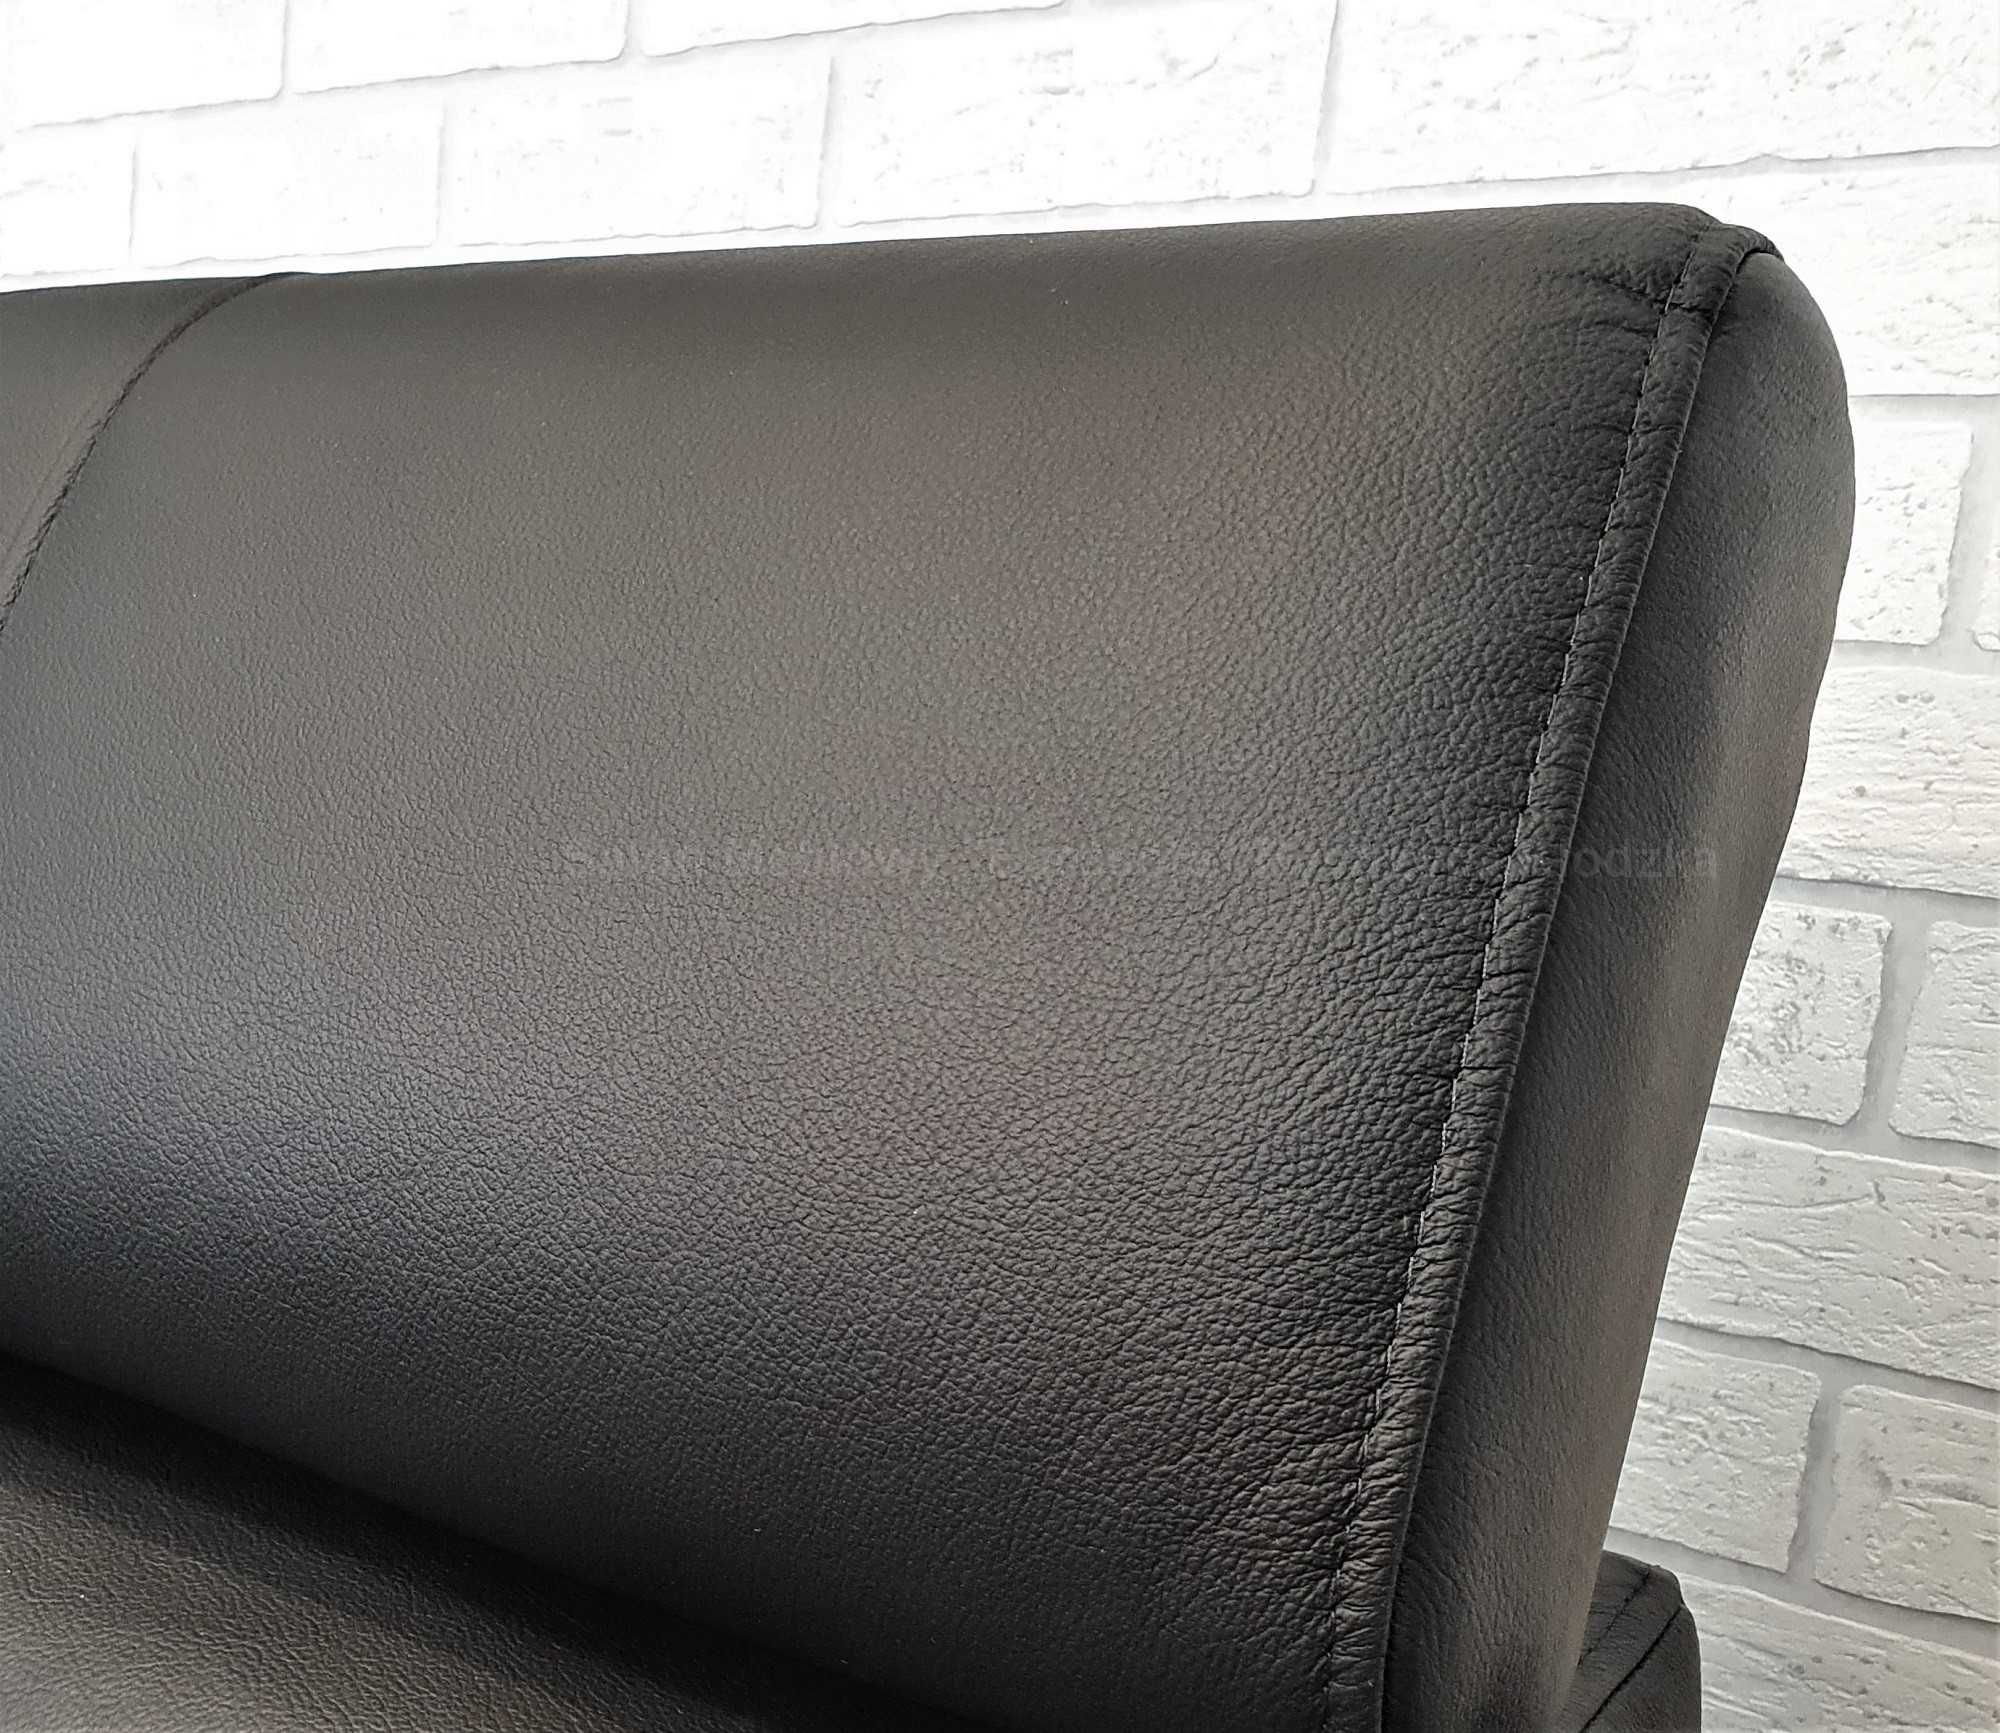 Mały narożnik 251x167 skóra naturalna czarna, rogówka skórzana, sofa